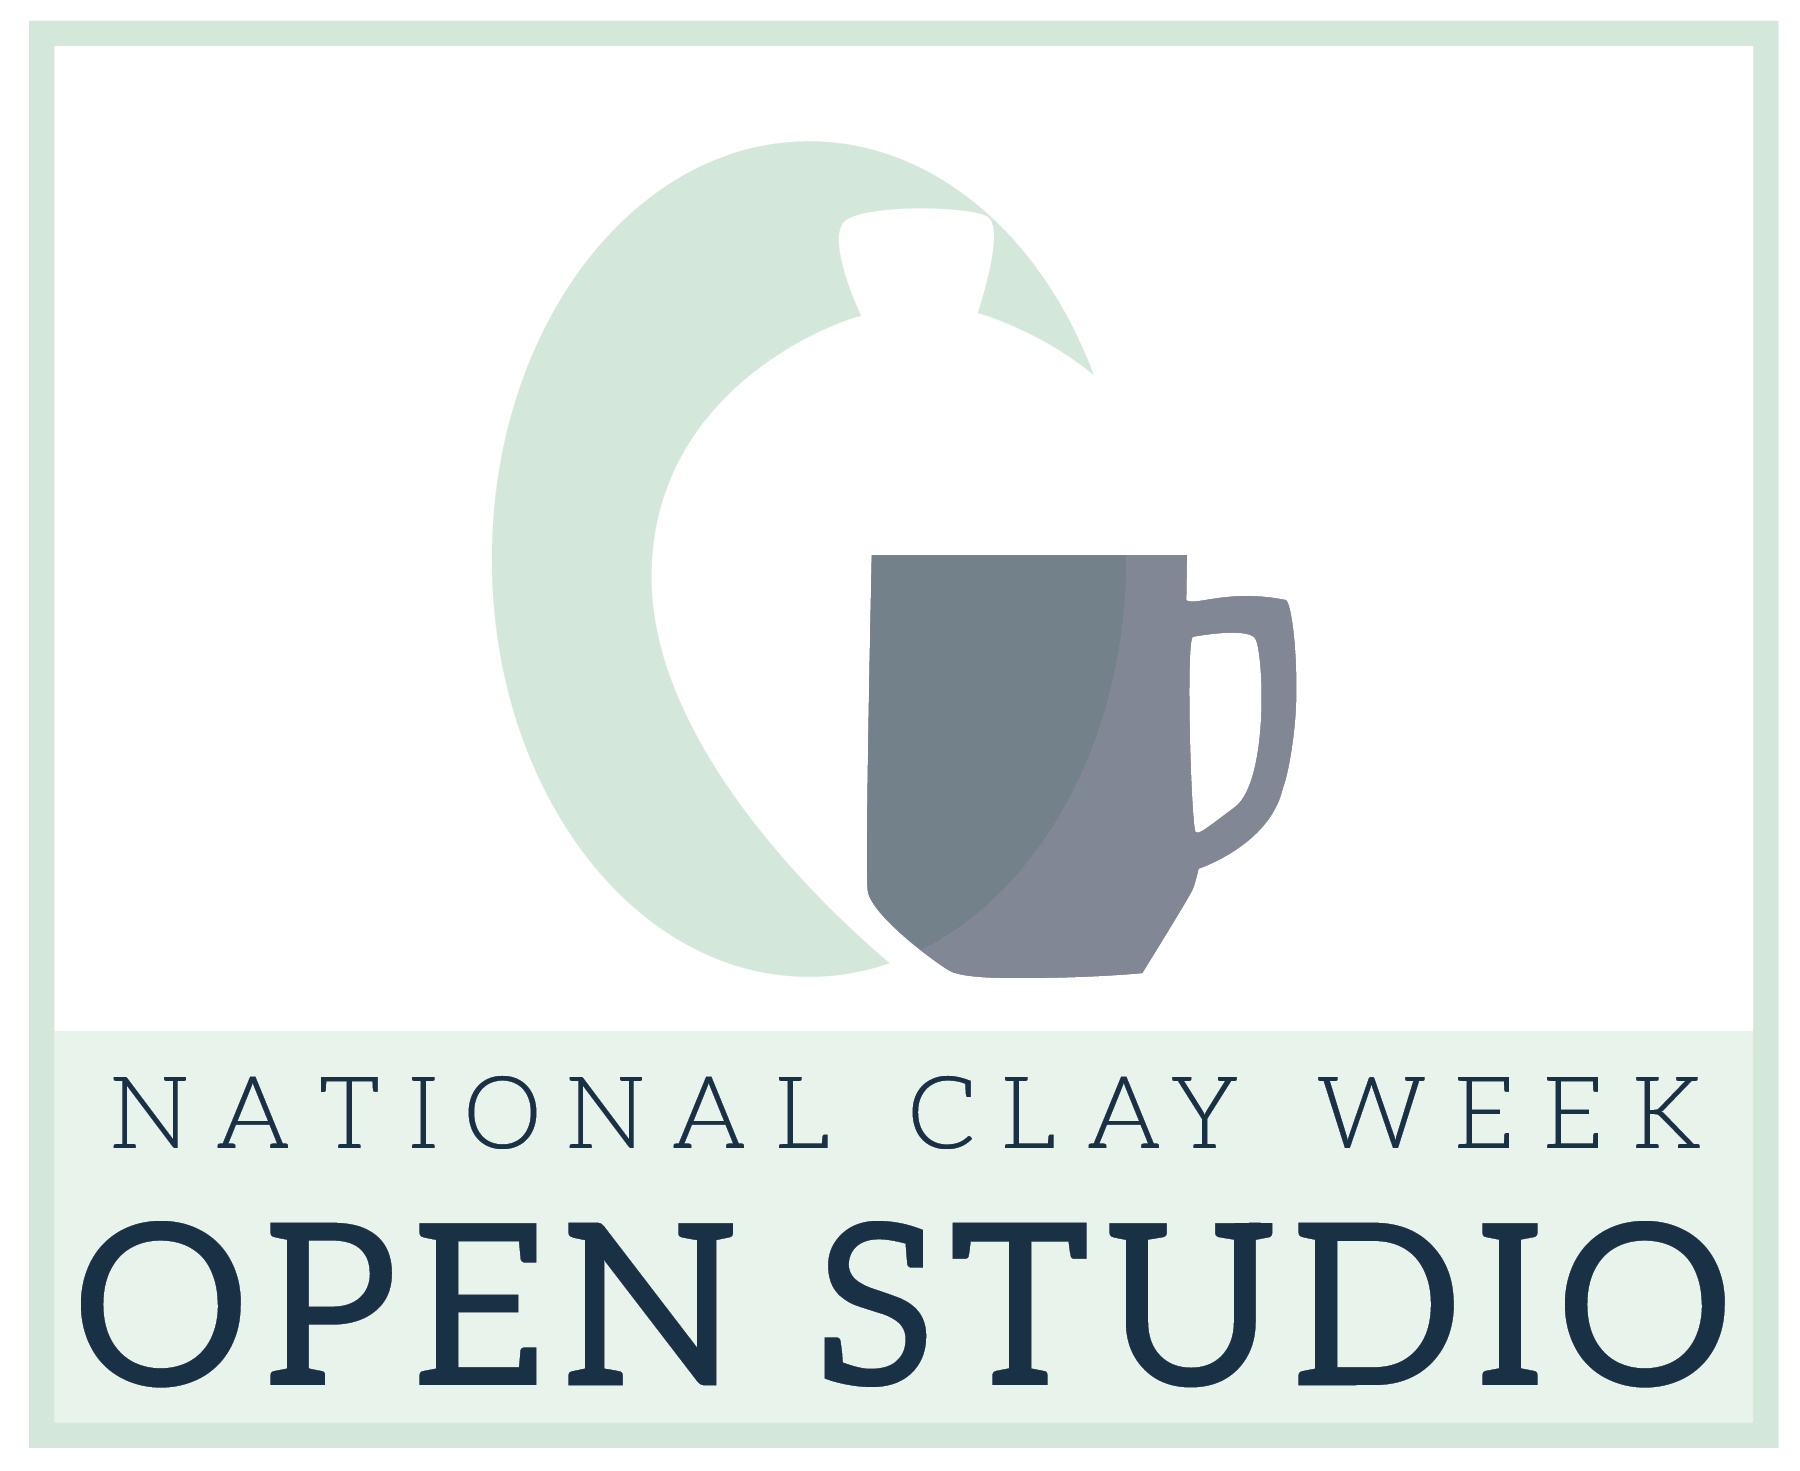 open studio for National Clay Week